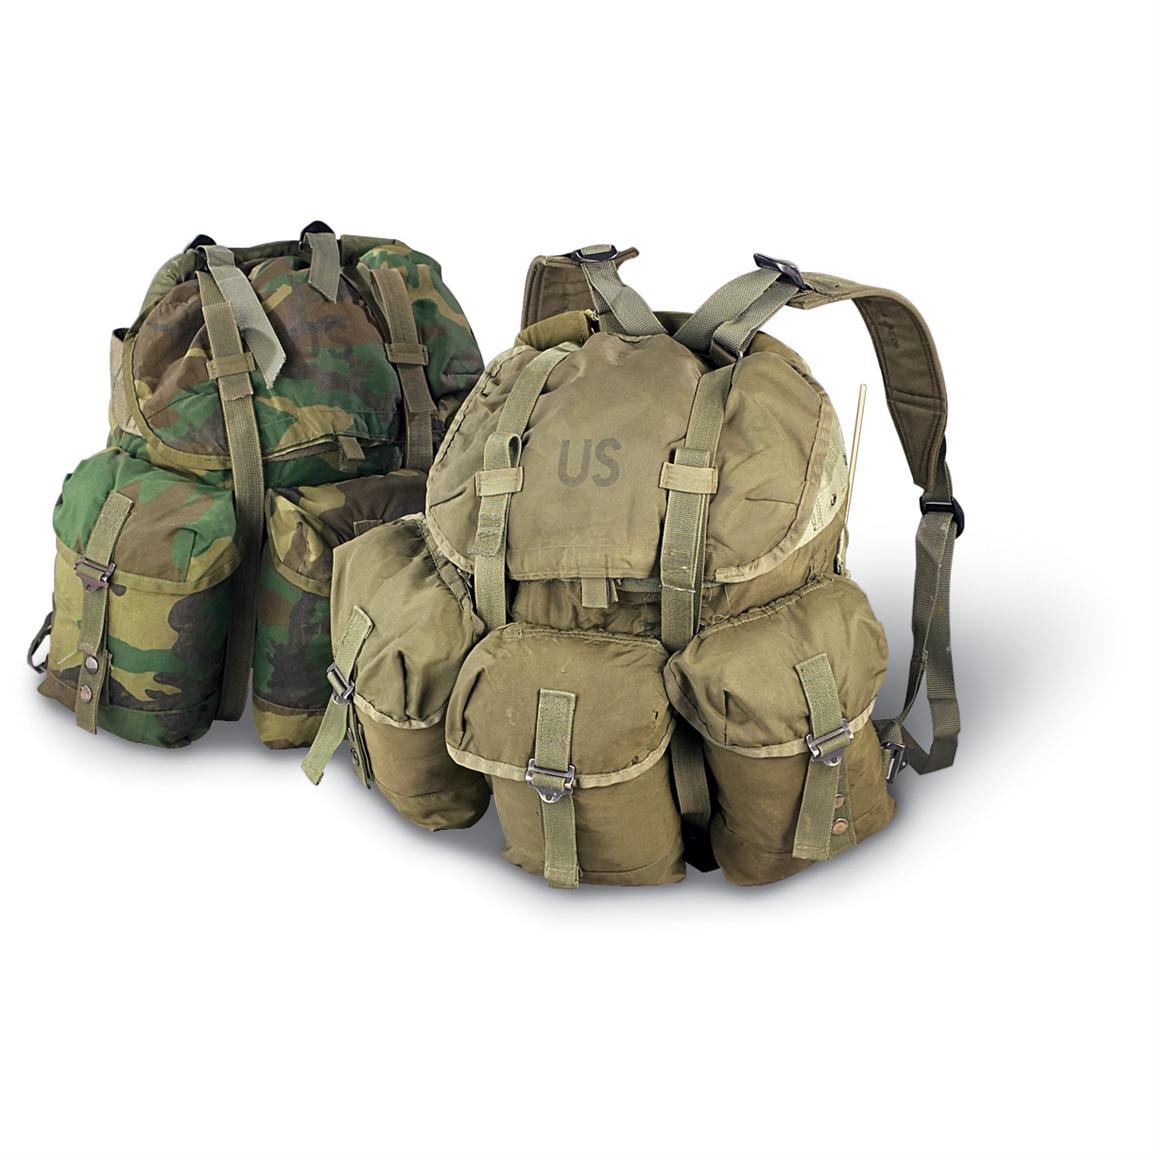 Used U.S. Military ALICE Pack with Shoulder Straps - 108027, Rucksacks & Backpacks at Sportsman ...